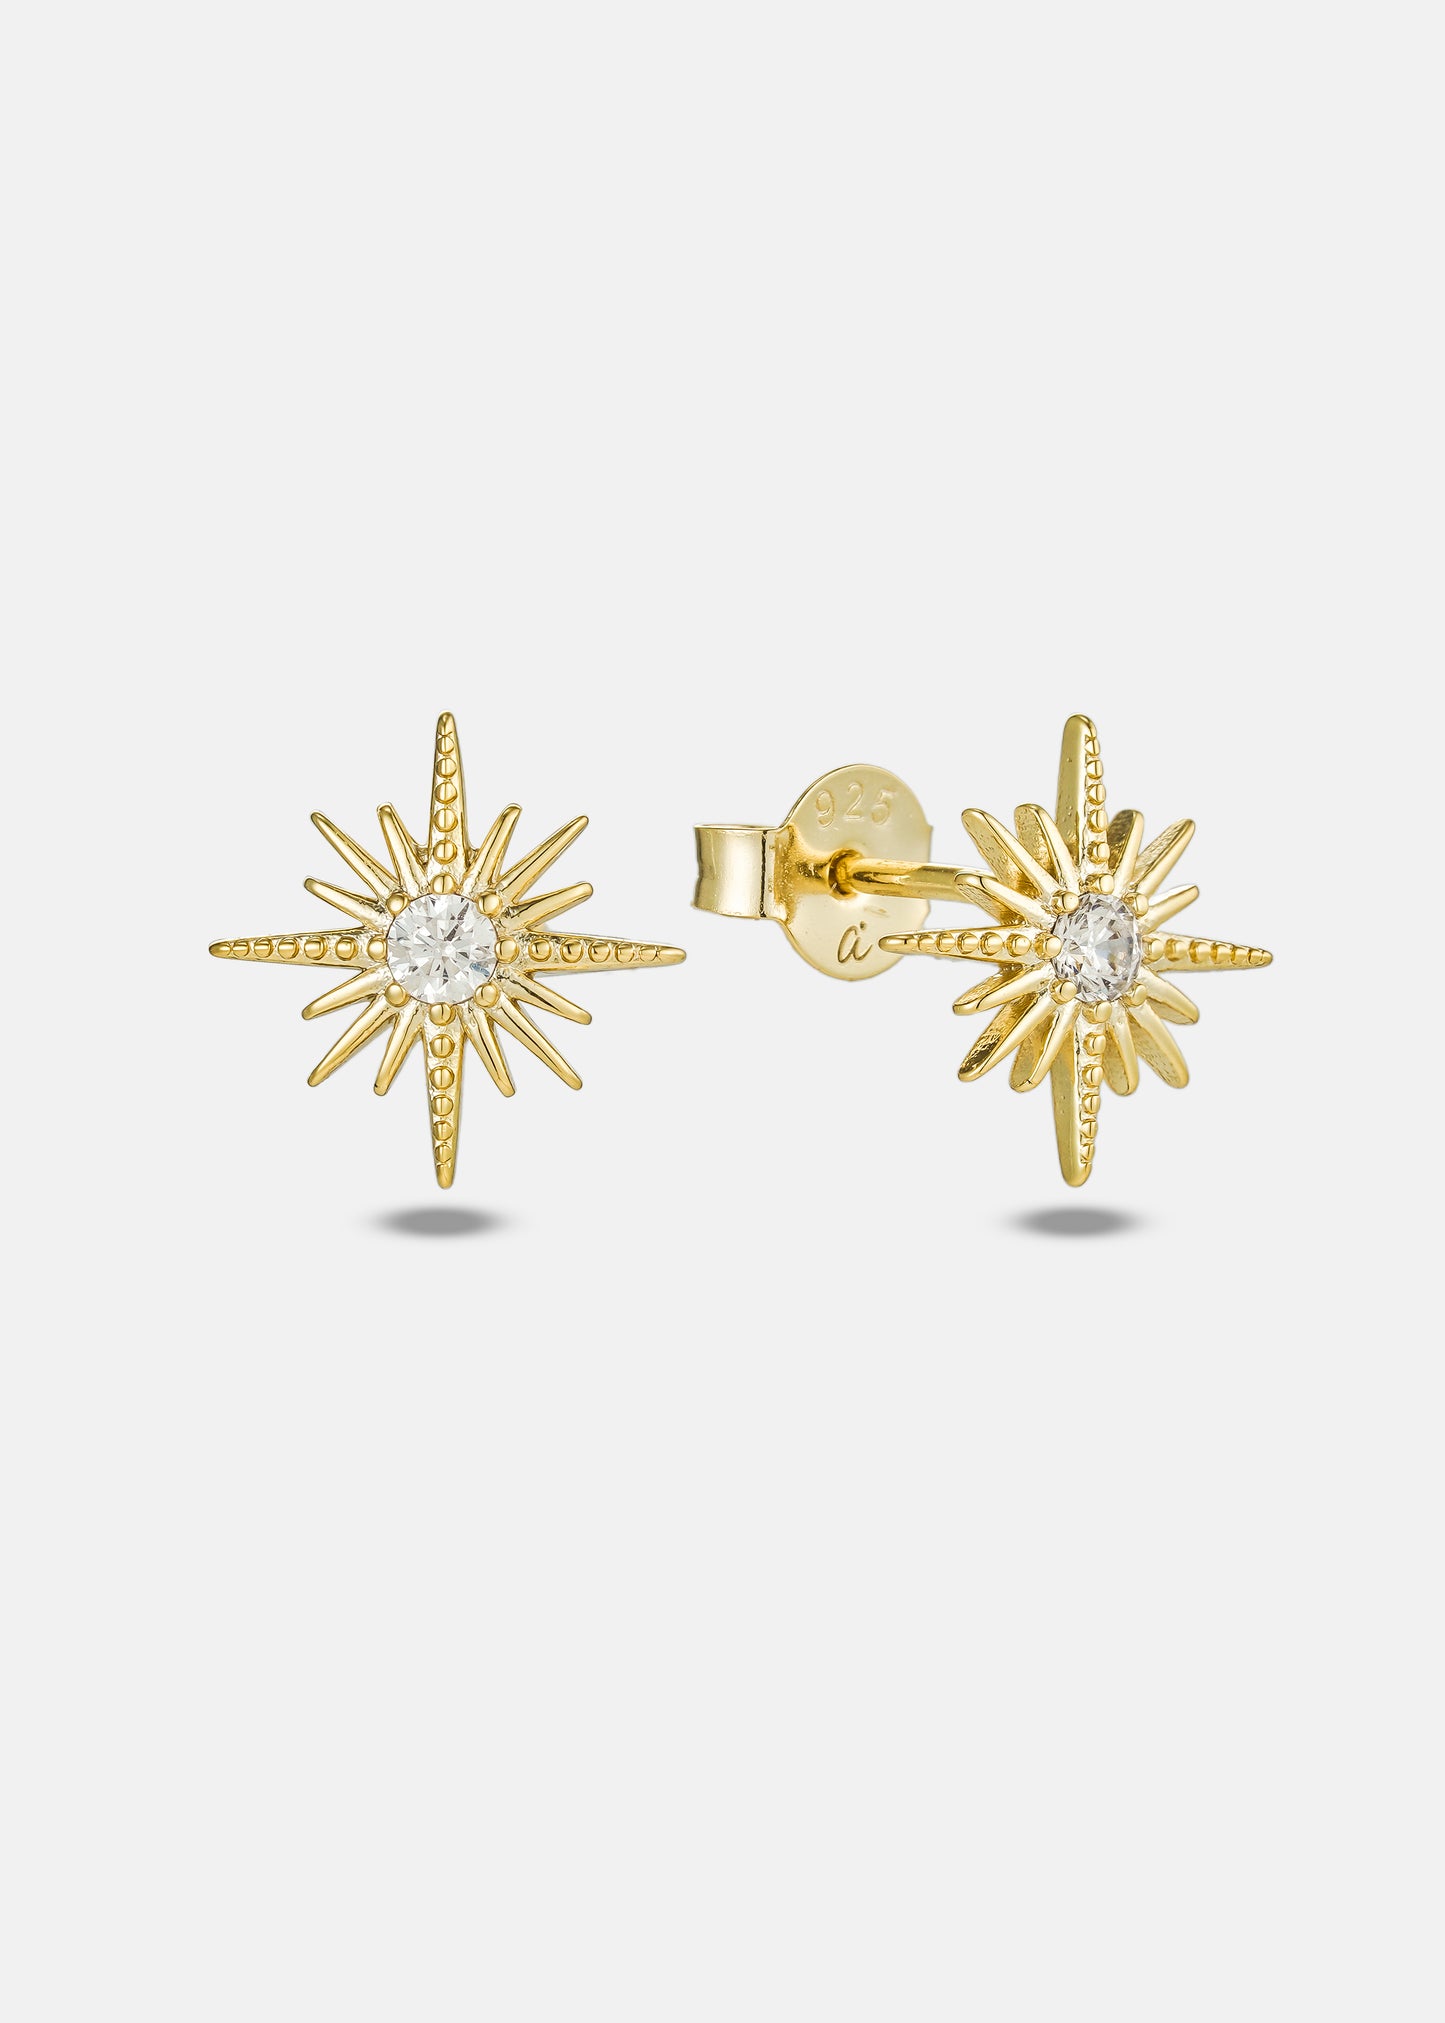 Grandmother & Granddaughter • Unique Gift for Grandma • Infinite Love • Silver • Intentional Keepsake Jewelry - Crystal Starburst Earrings